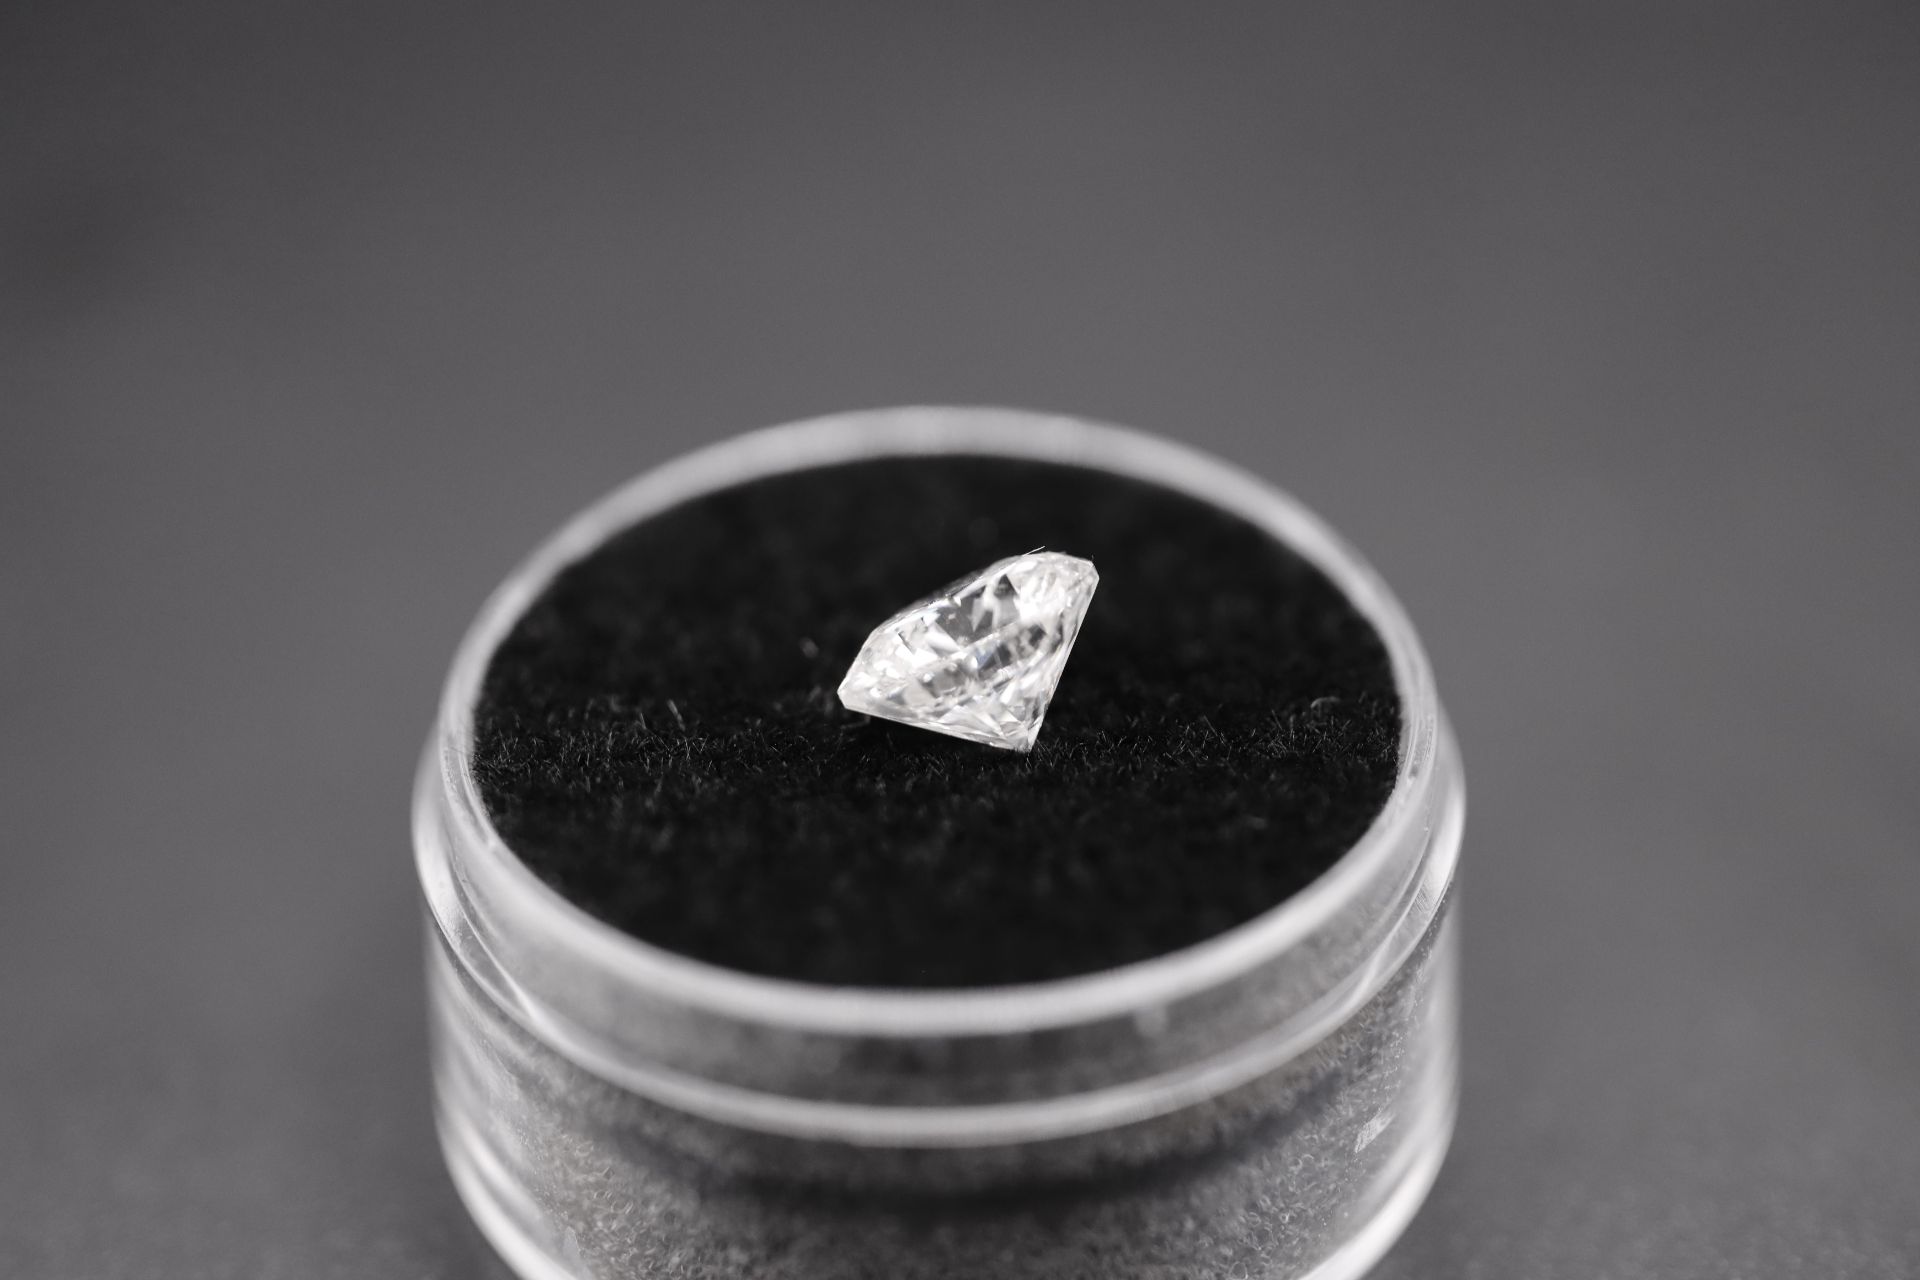 Round Brilliant Cut Natural Diamond 2.01 Carat Colour D Clarity VS1 - DGI Certificate - Image 3 of 24